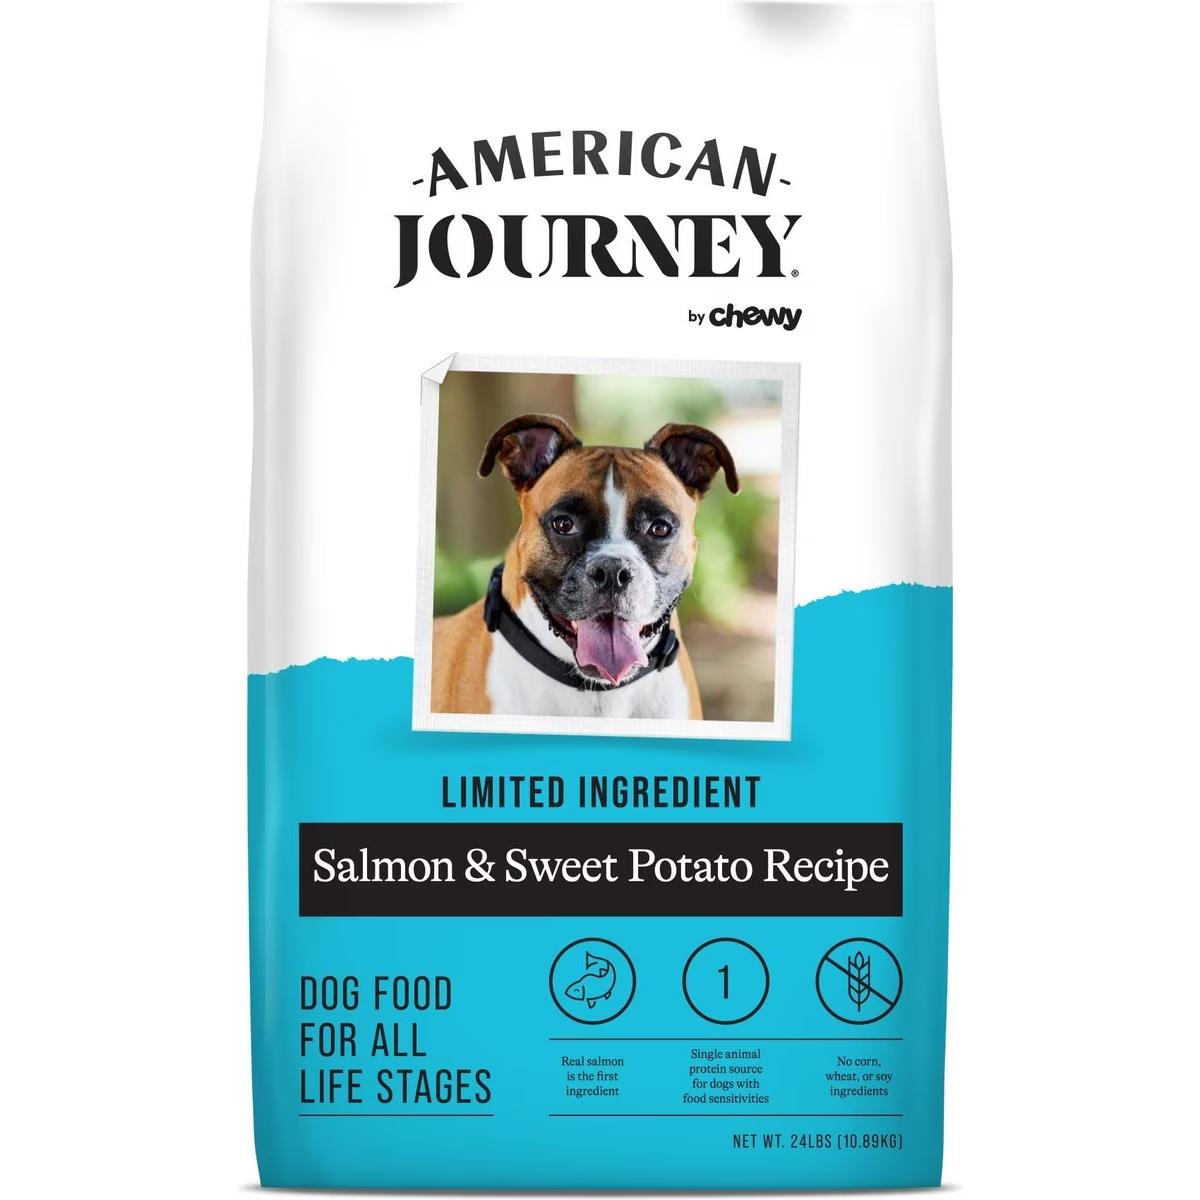 American Journey Limited Ingredient Salmon & Sweet Potato Recipe Grain-Free Dry Dog Food 